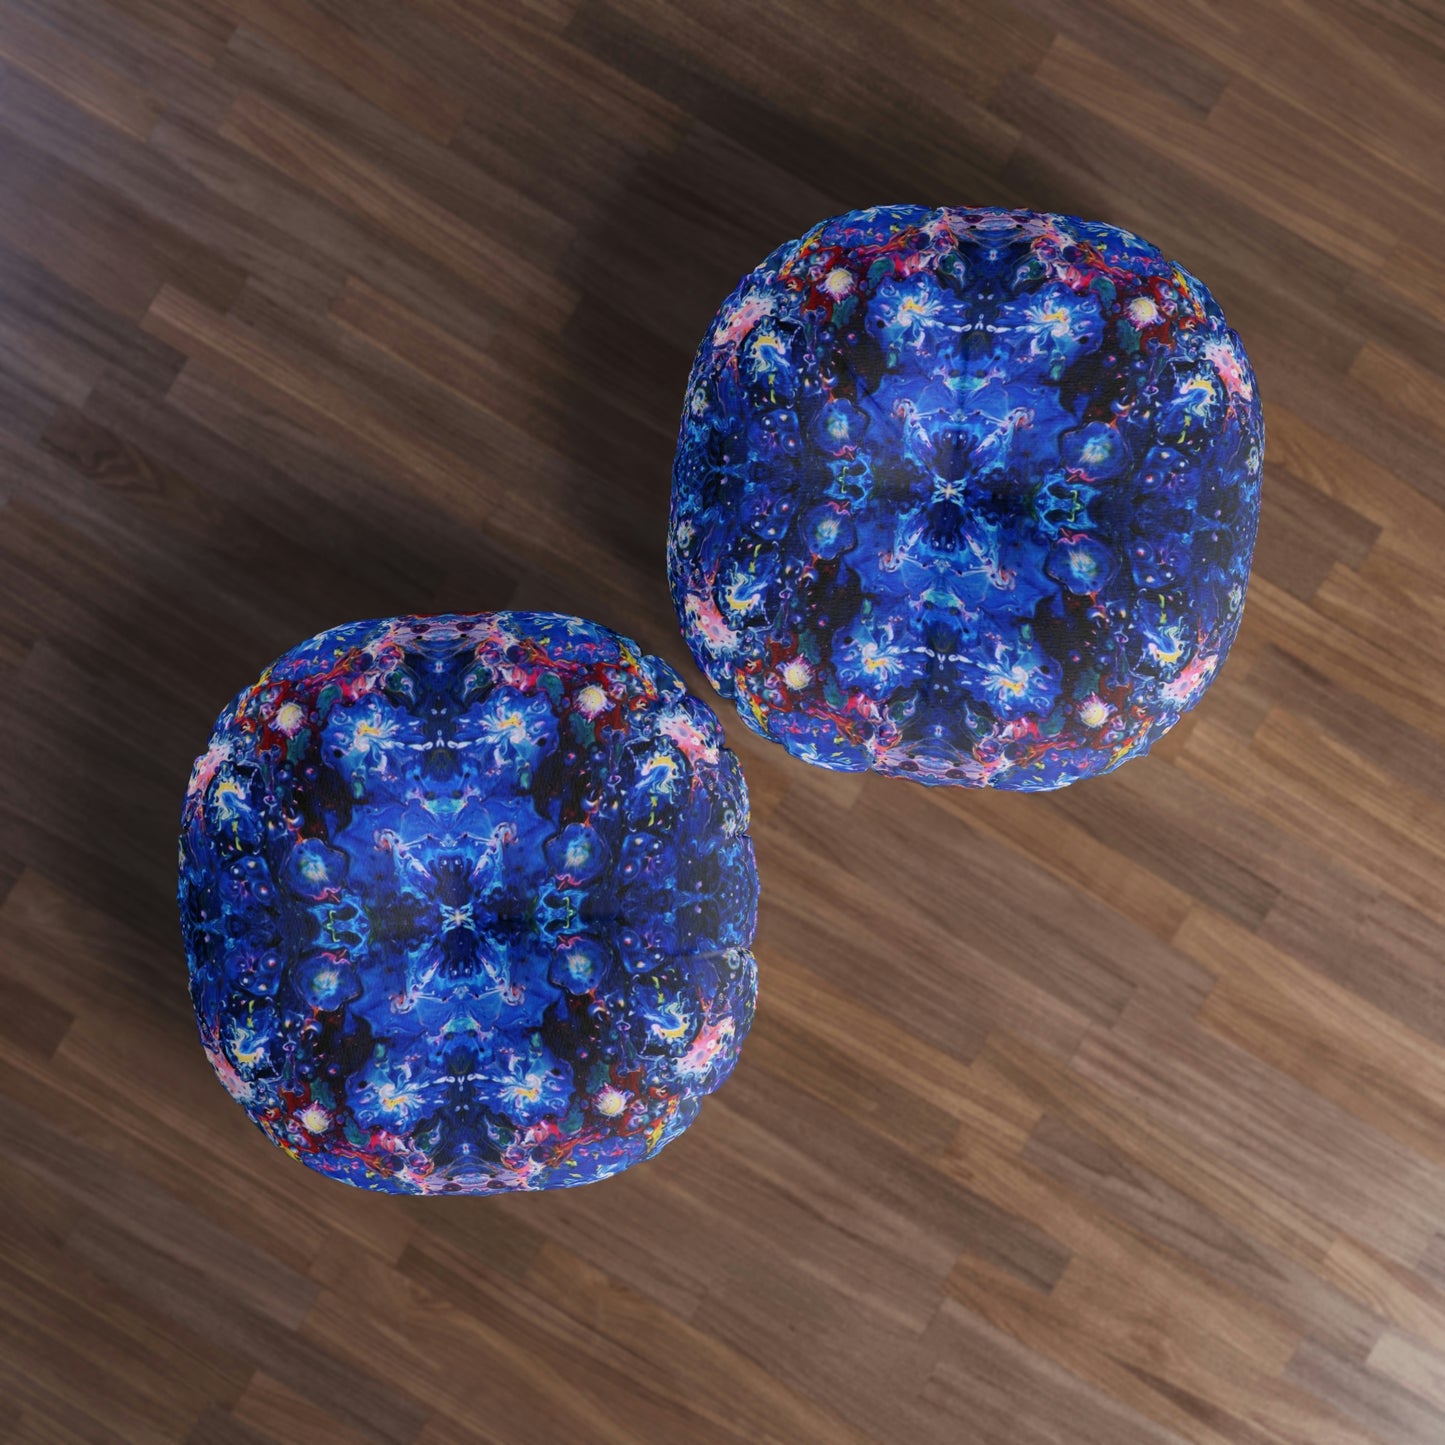 Universe floor cushion, round 